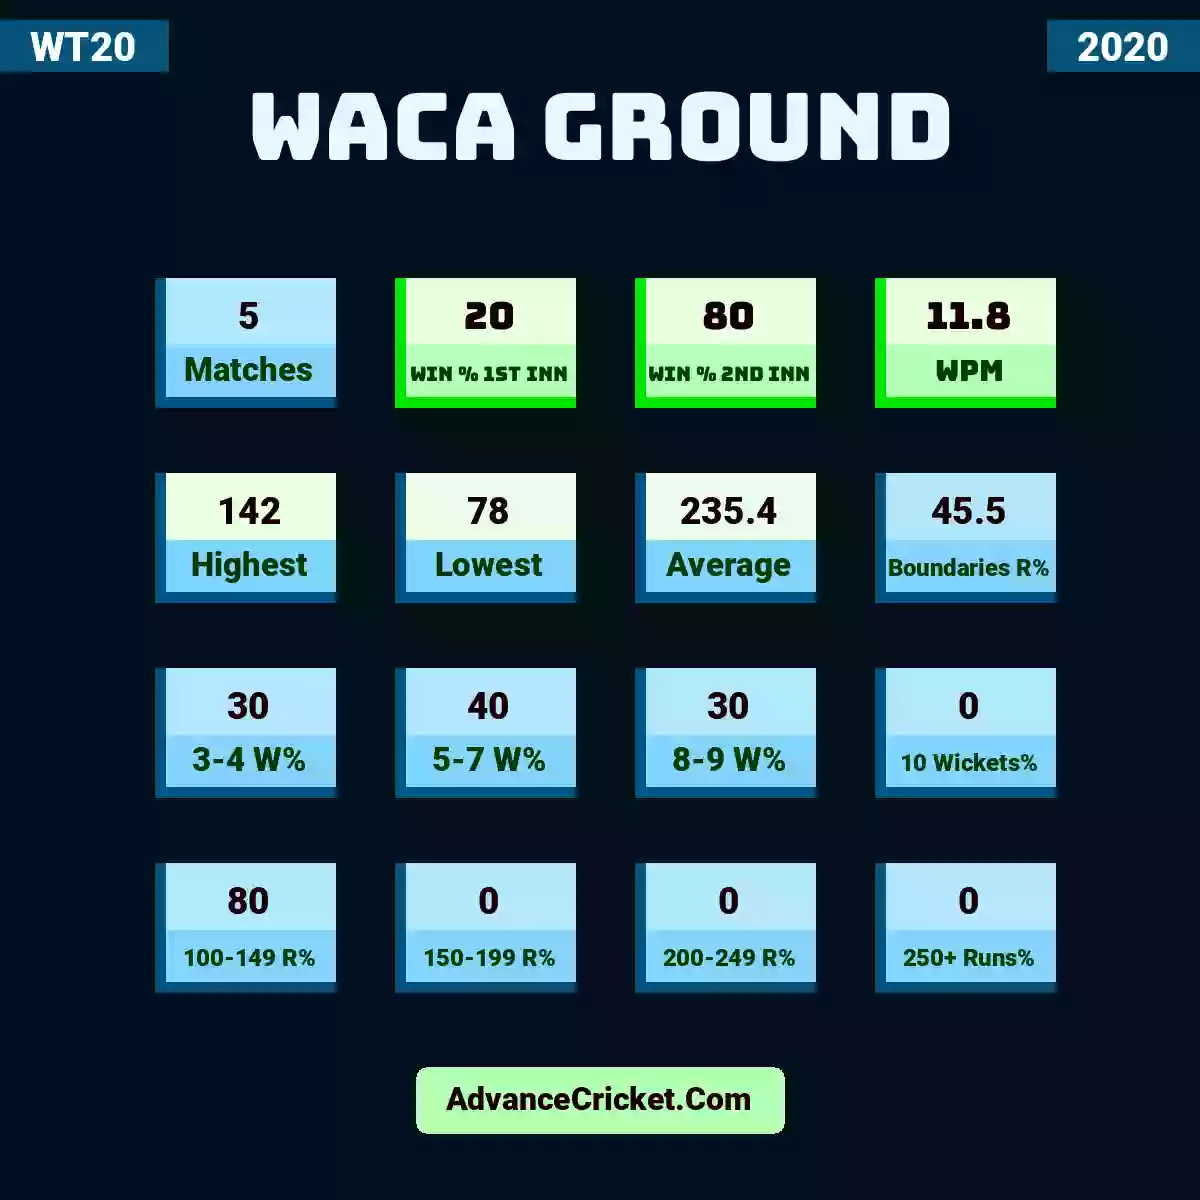 Image showing WACA Ground with Matches: 5, Win % 1st Inn: 20, Win % 2nd Inn: 80, WPM: 11.8, Highest: 142, Lowest: 78, Average: 235.4, Boundaries R%: 45.5, 3-4 W%: 30, 5-7 W%: 40, 8-9 W%: 30, 10 Wickets%: 0, 100-149 R%: 80, 150-199 R%: 0, 200-249 R%: 0, 250+ Runs%: 0.